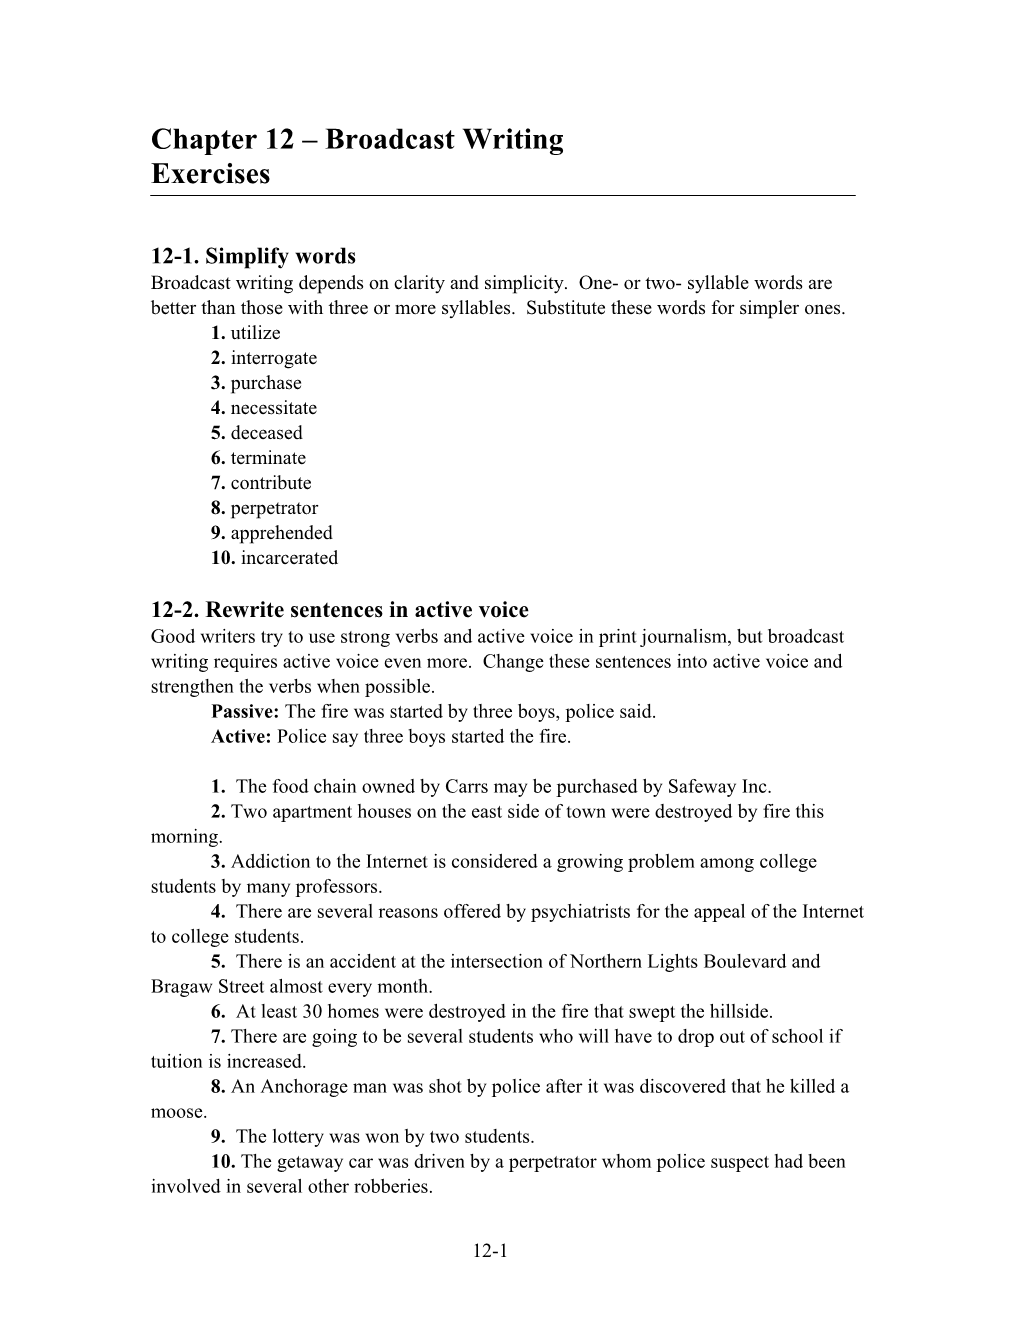 Chapter 12 Web Workbook Exercises